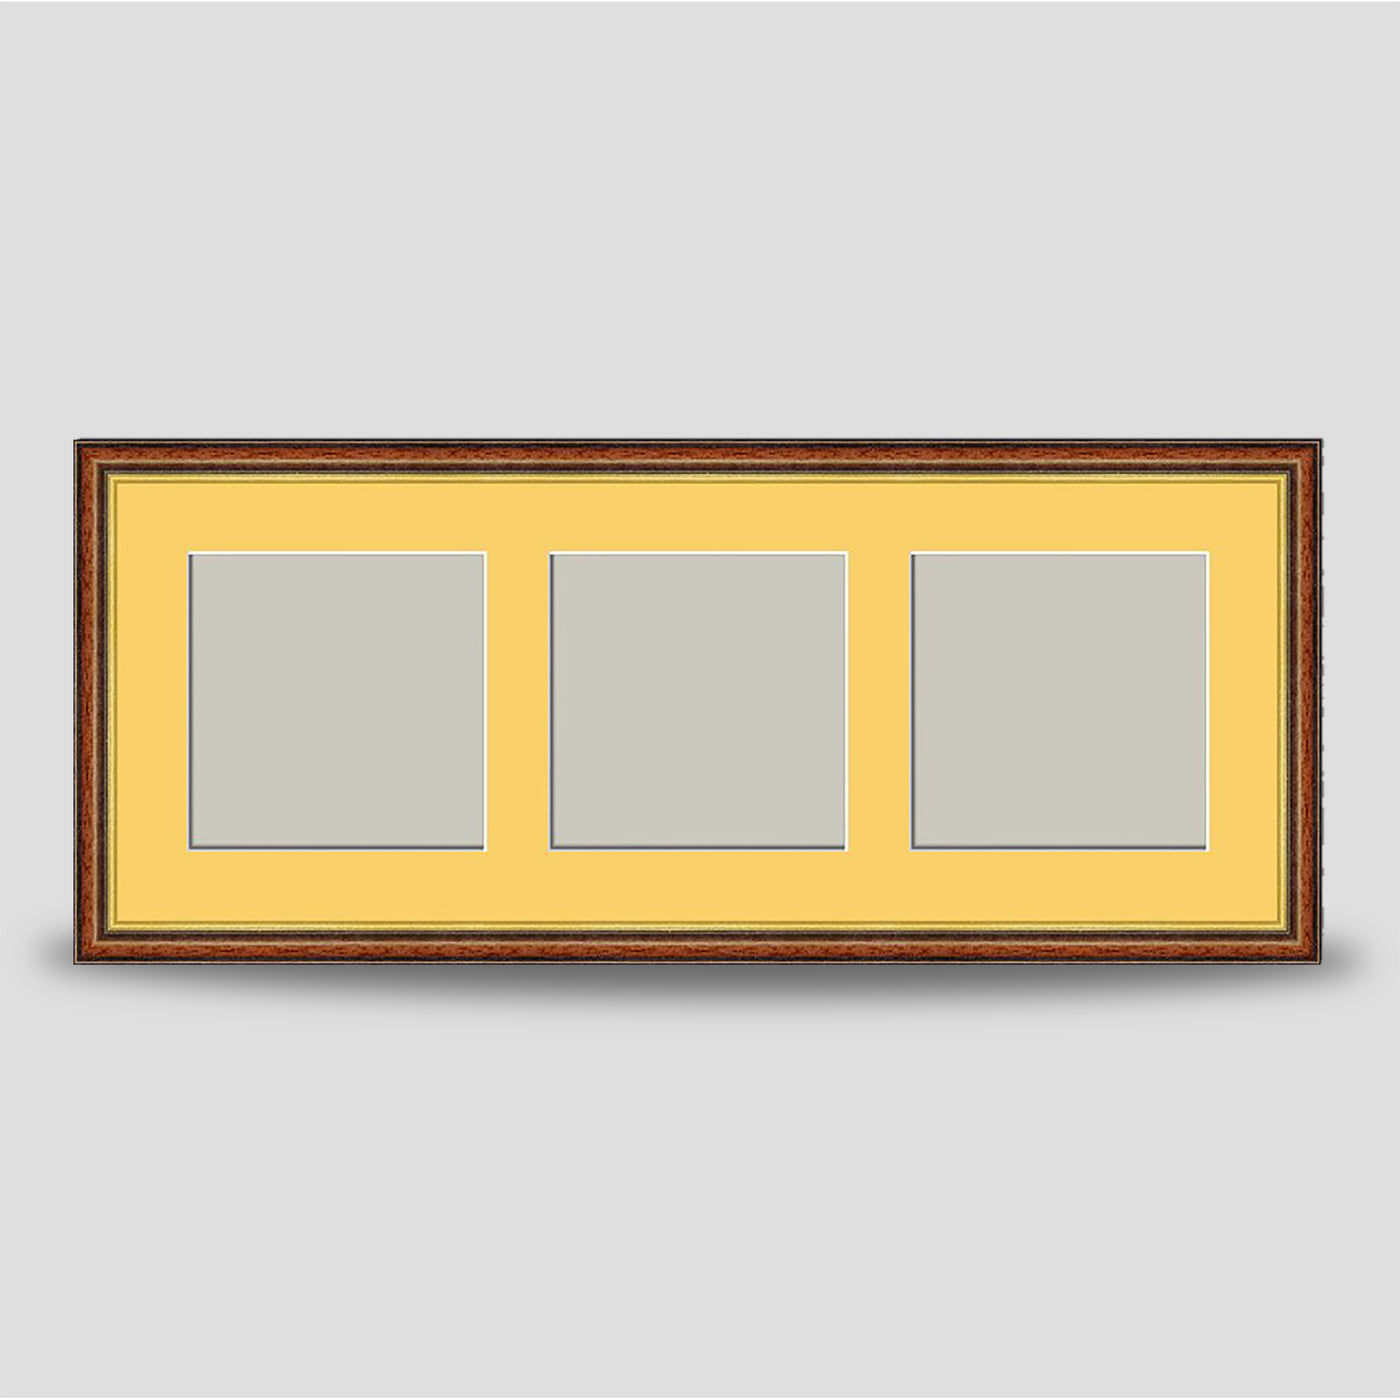 Brown & Gold Triple Landscape Frame Square Size Prints - Various Sizes